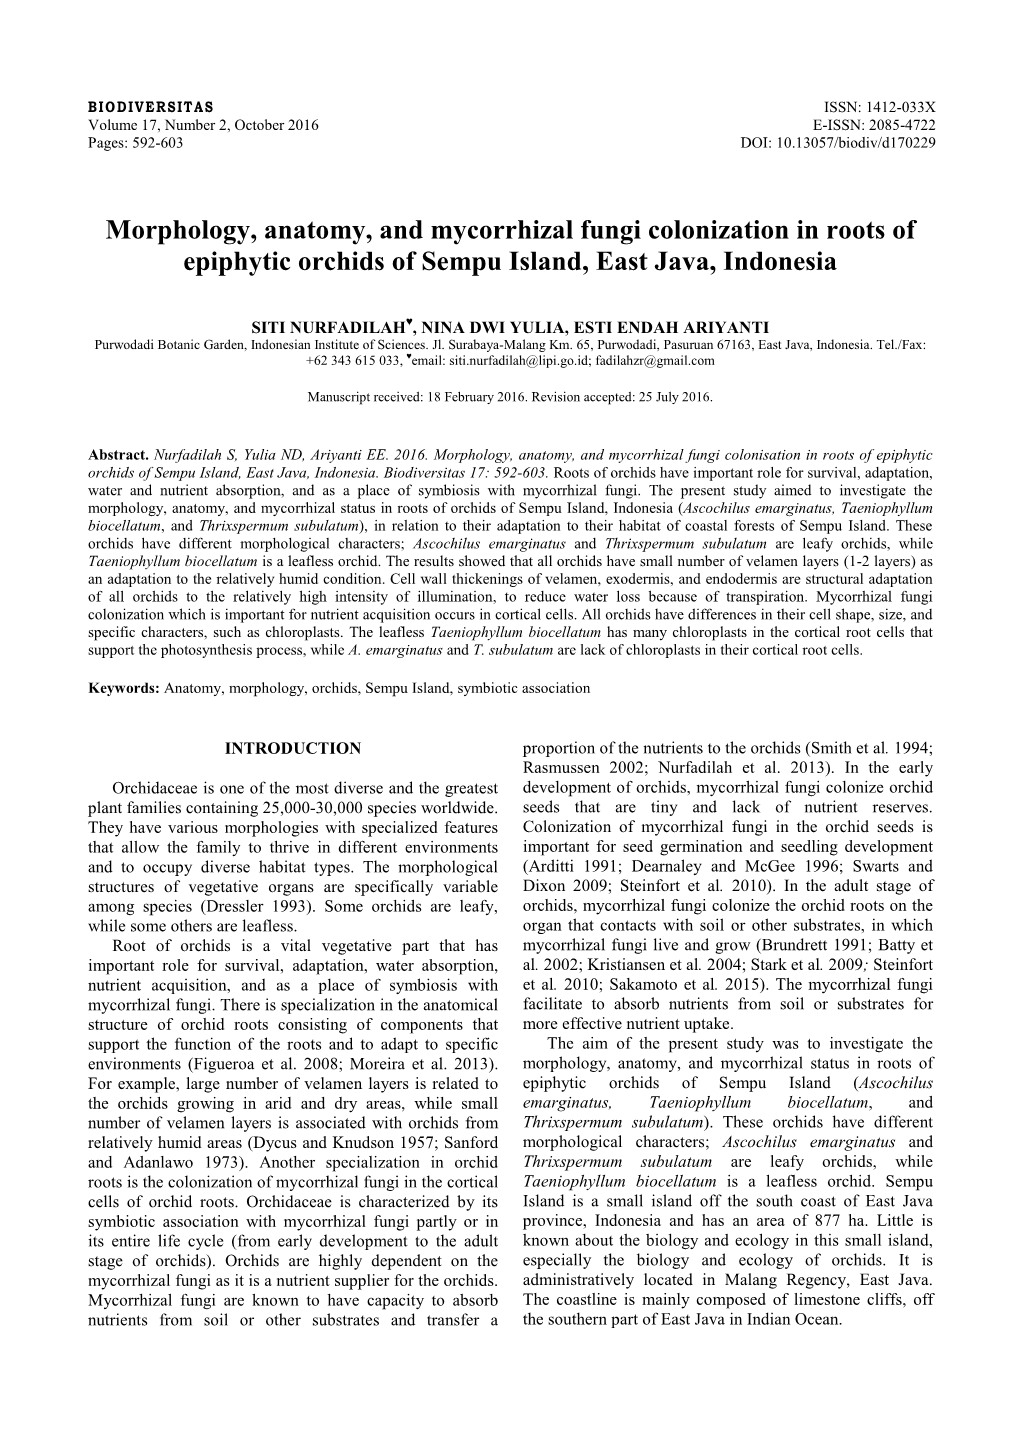 Morphology, Anatomy, and Mycorrhizal Fungi Colonization in Roots of Epiphytic Orchids of Sempu Island, East Java, Indonesia